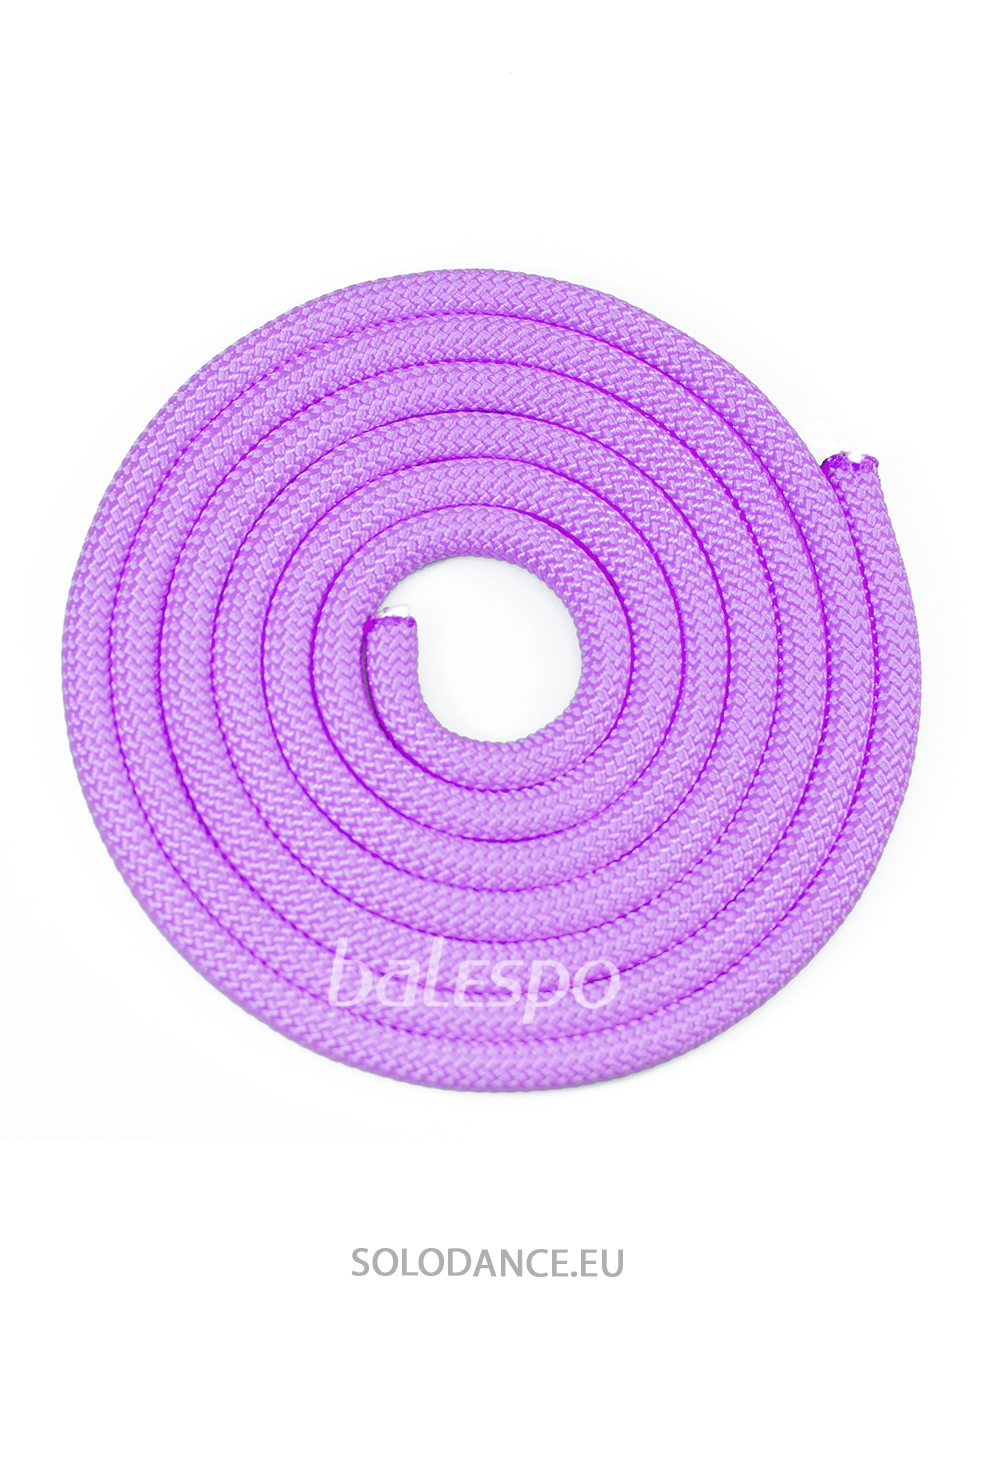 Gymnastic rope BALESPO lilac 3 m